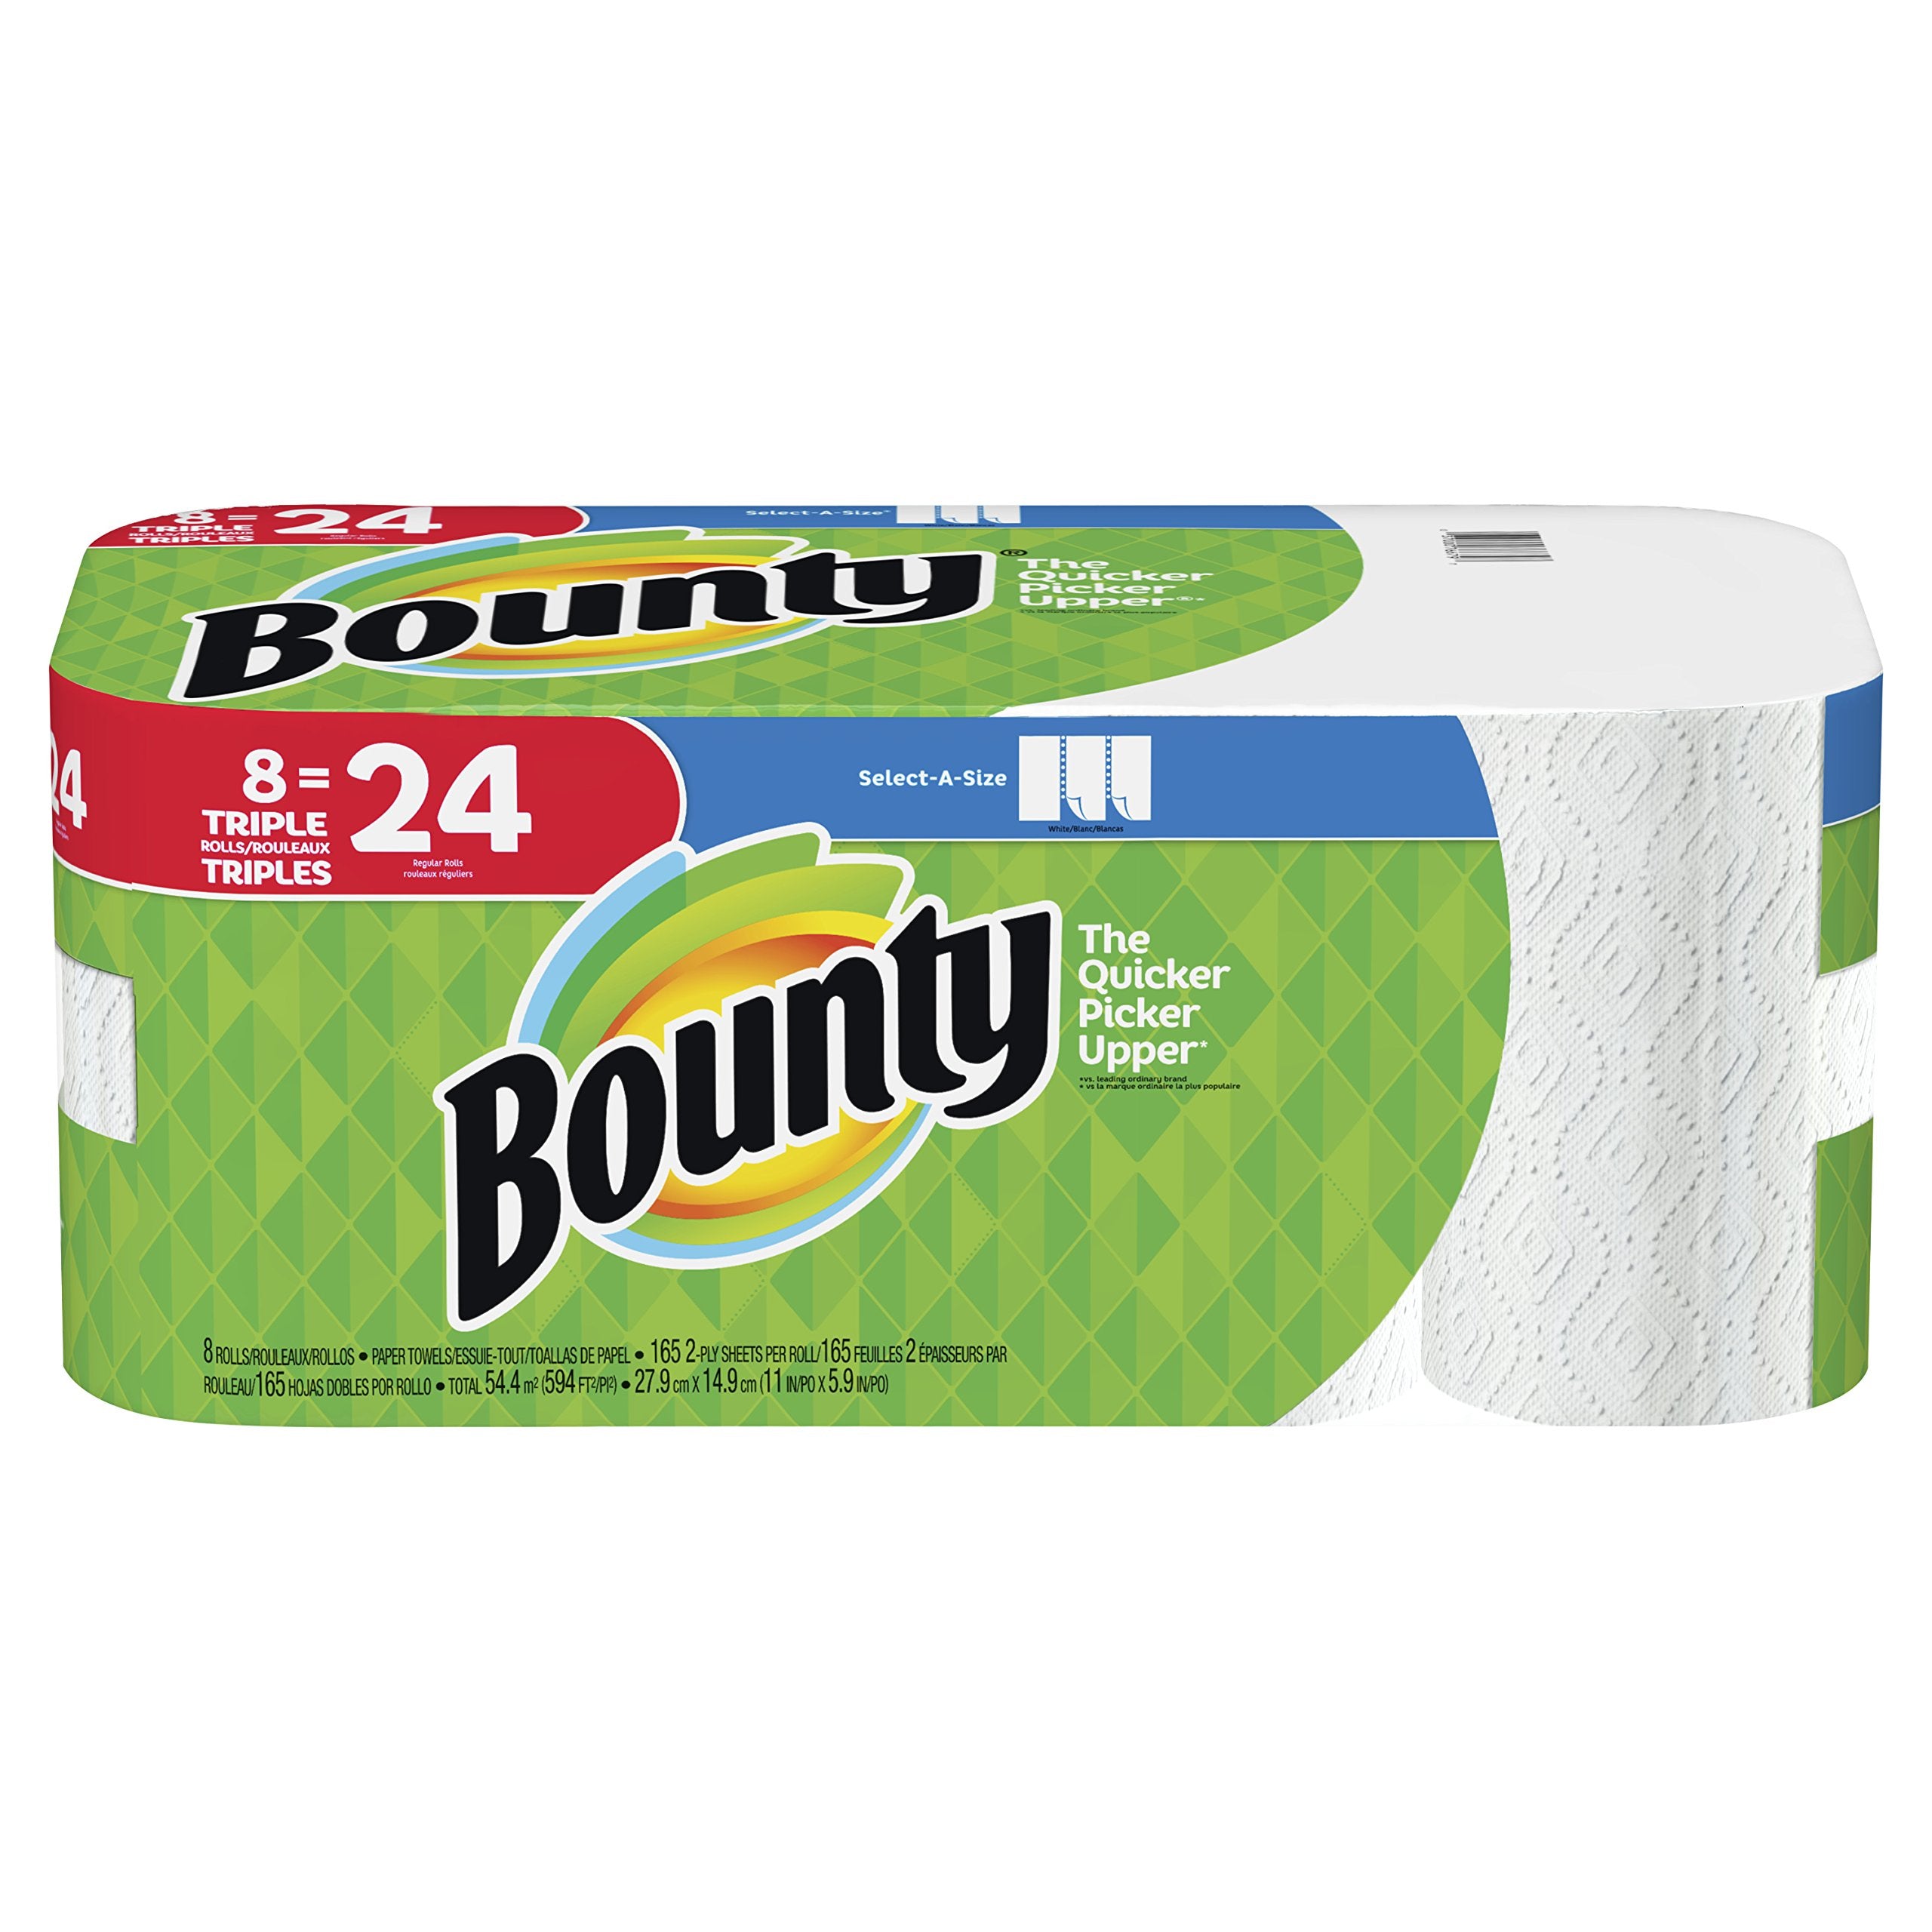 Bounty Paper Towels, Select-A-Size, 8 Triple Rolls